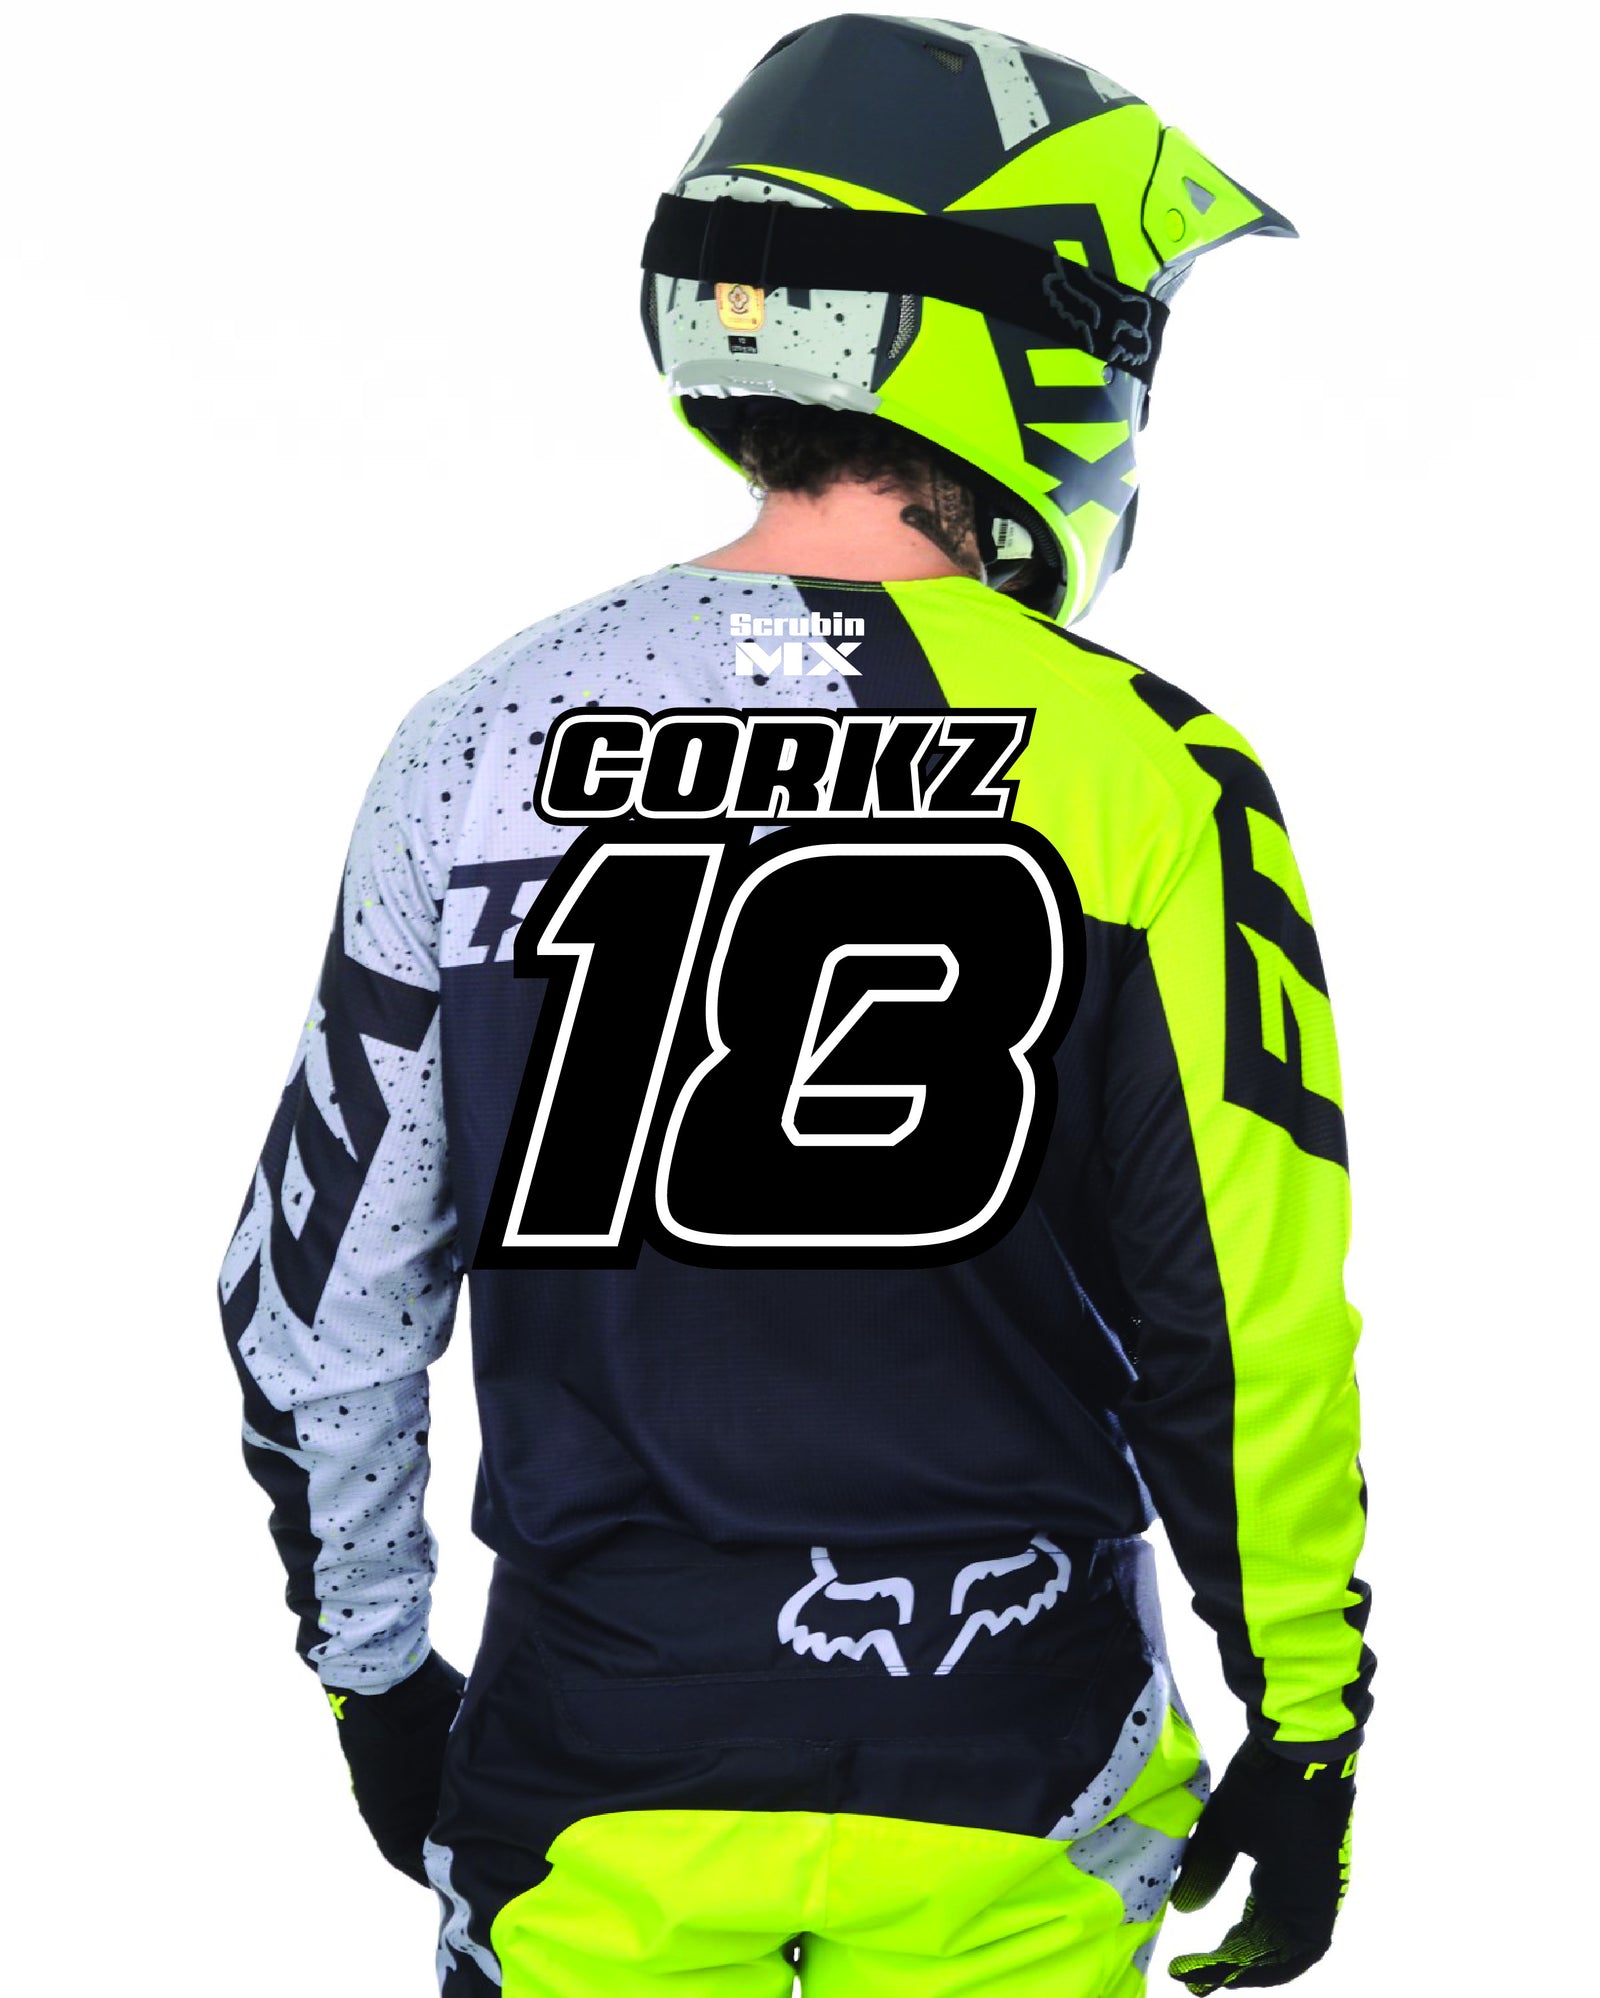 custom motocross jersey australia